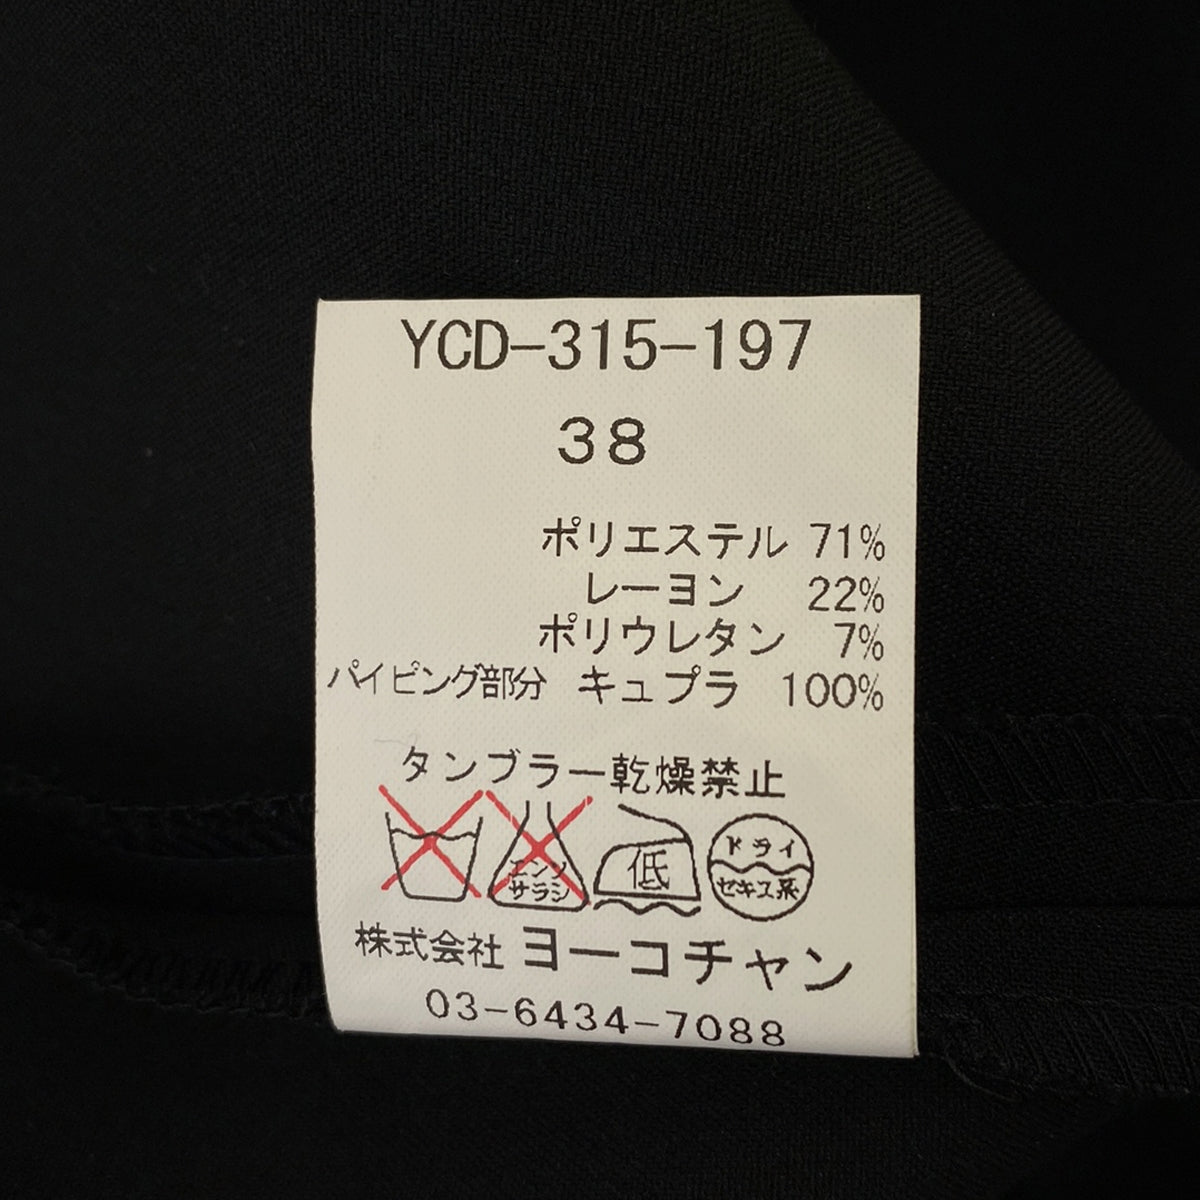 YOKO CHAN / ヨーコチャン | フレンチスリーブ 裾ギャザー ワンピース | 38 | レディース